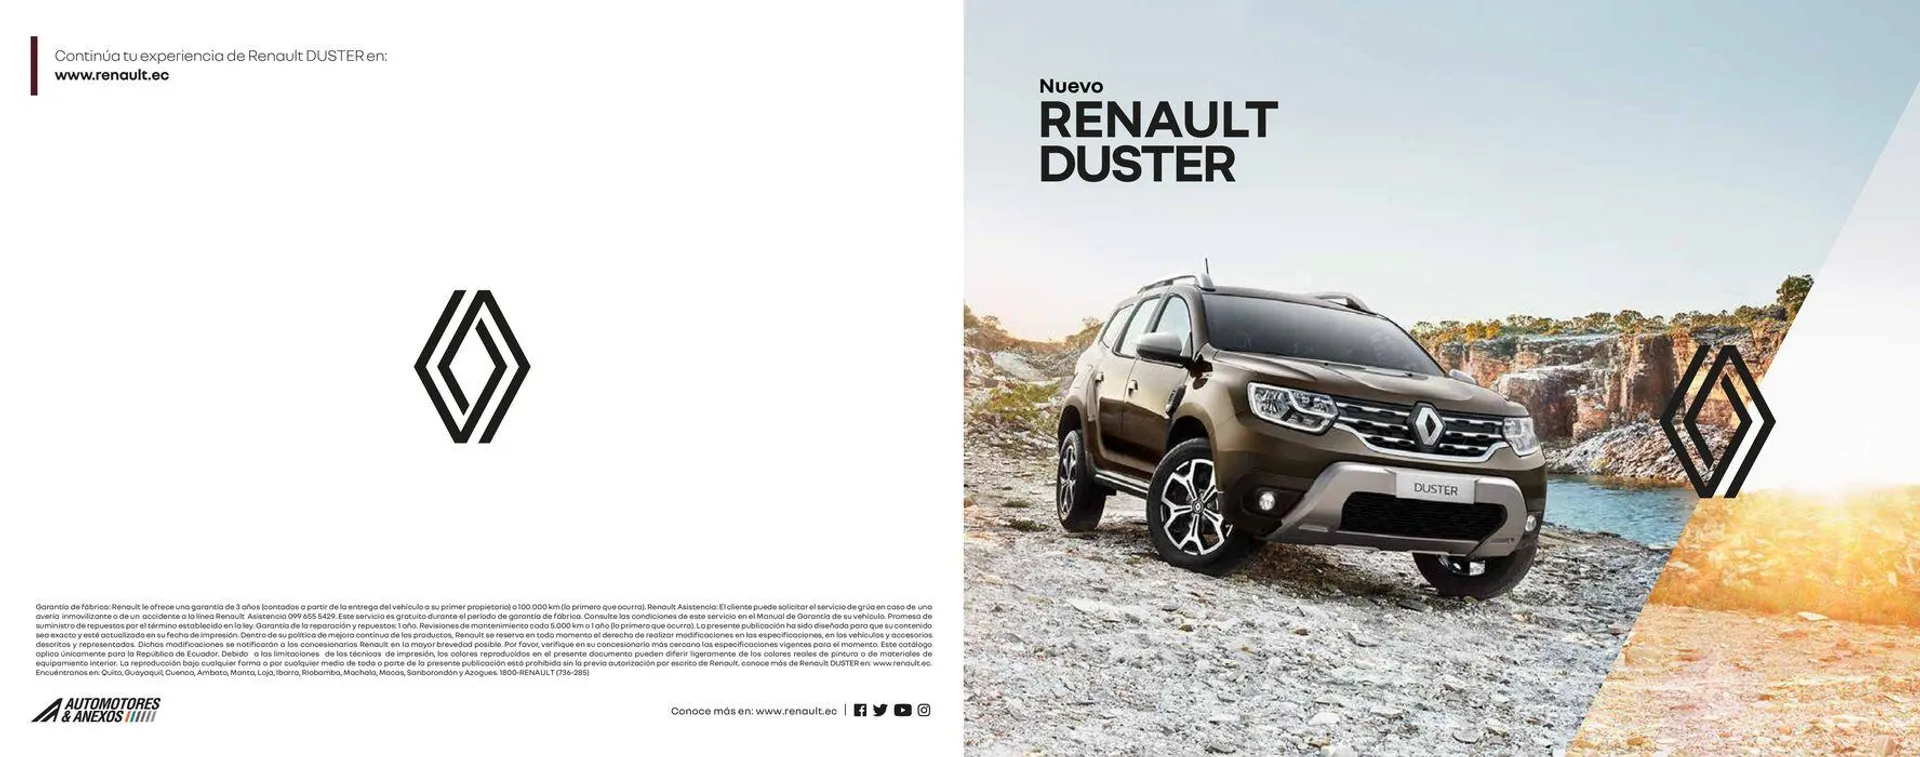 Nuevo Renault DUSTER - 1